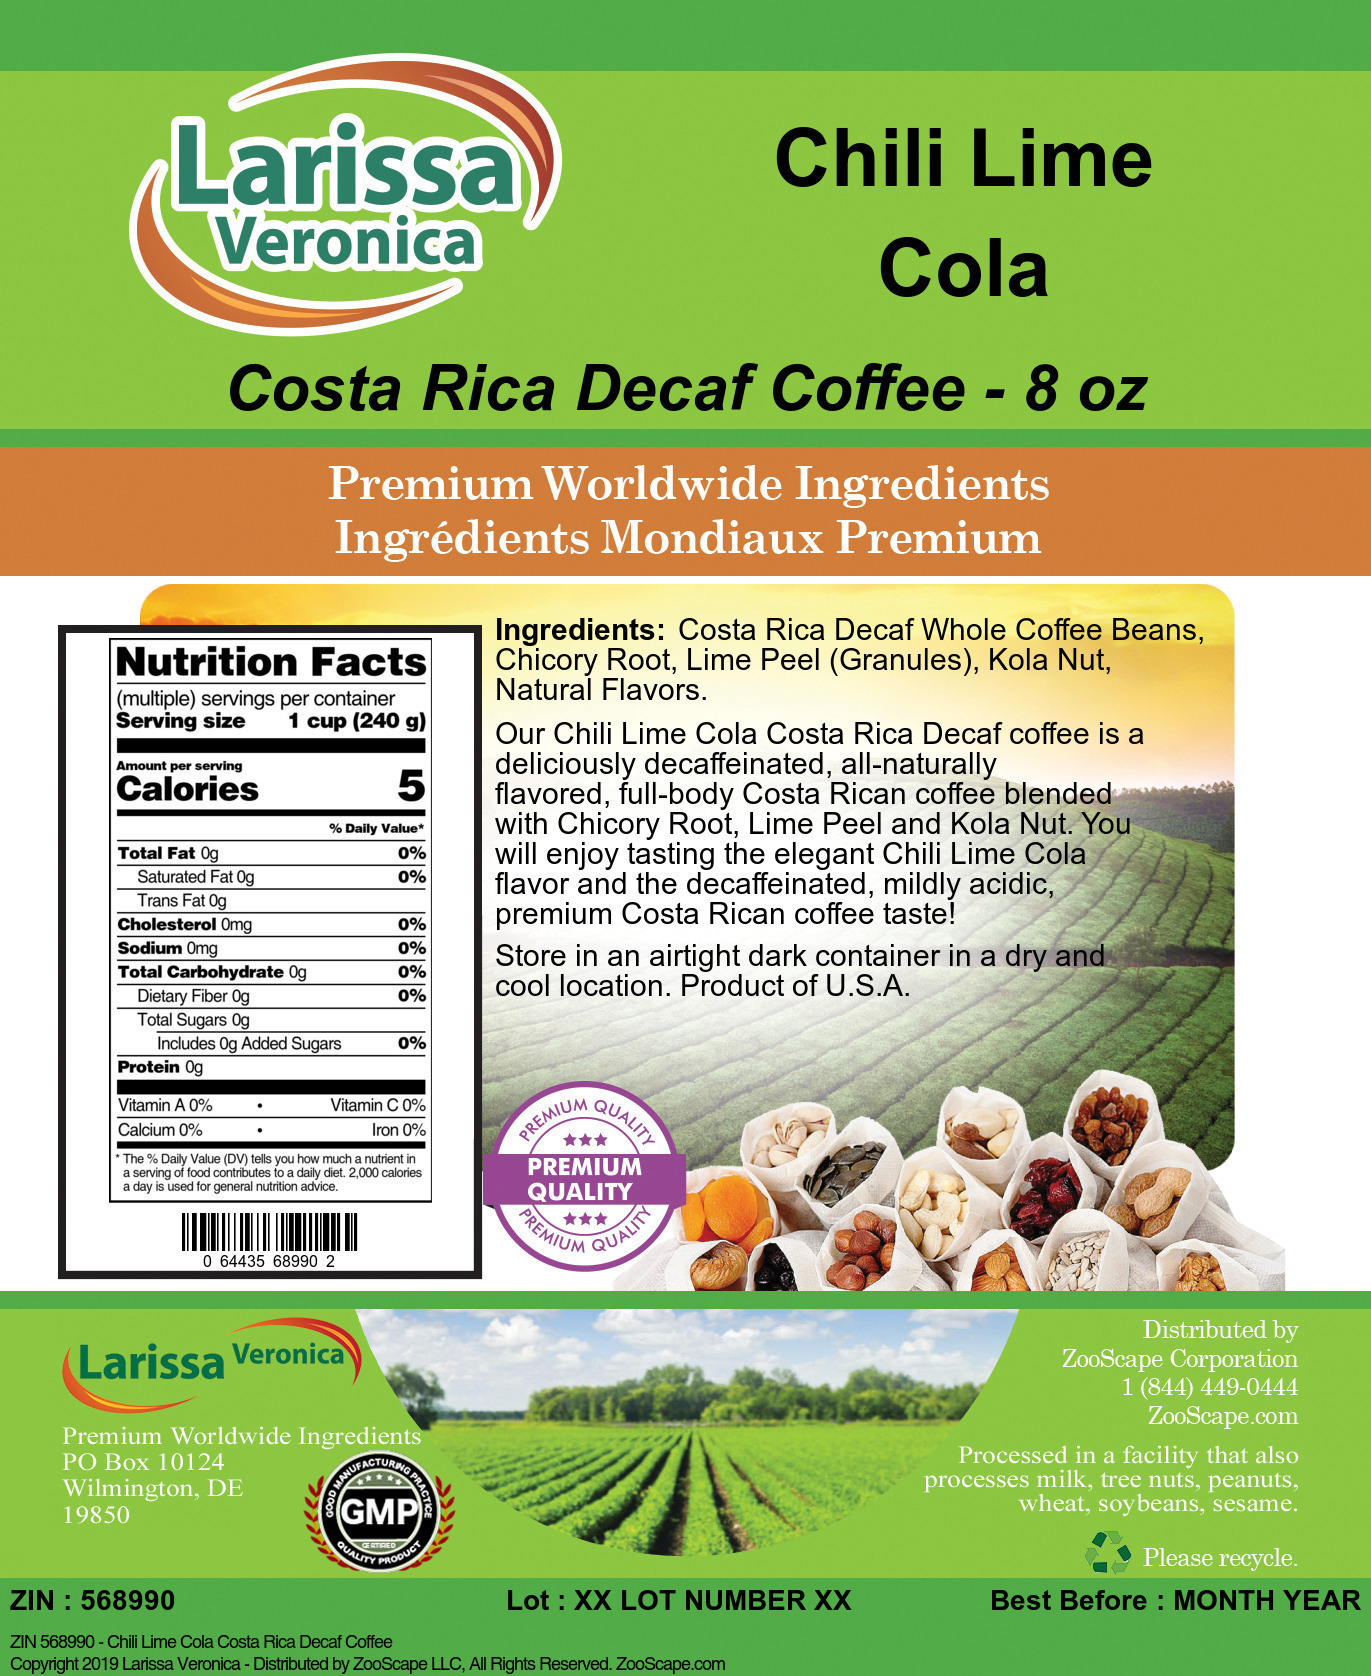 Chili Lime Cola Costa Rica Decaf Coffee - Label